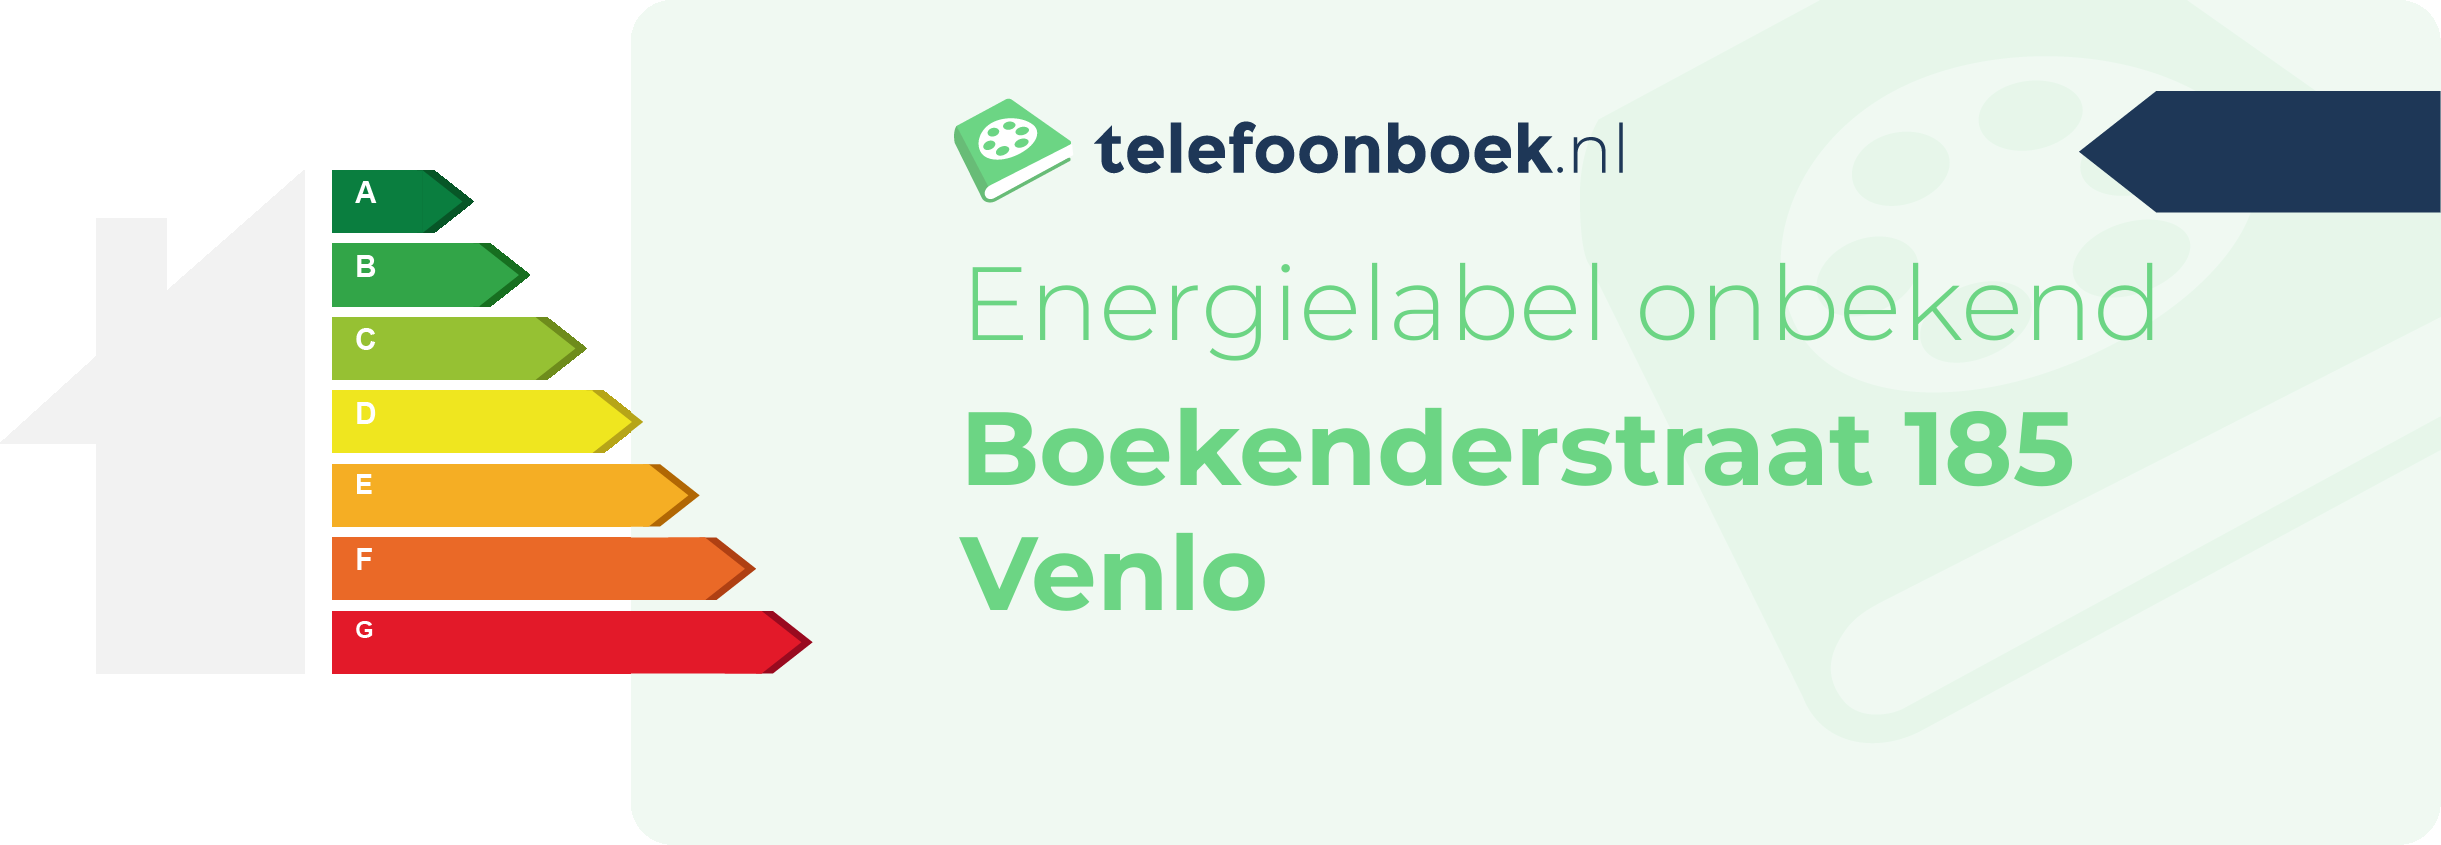 Energielabel Boekenderstraat 185 Venlo